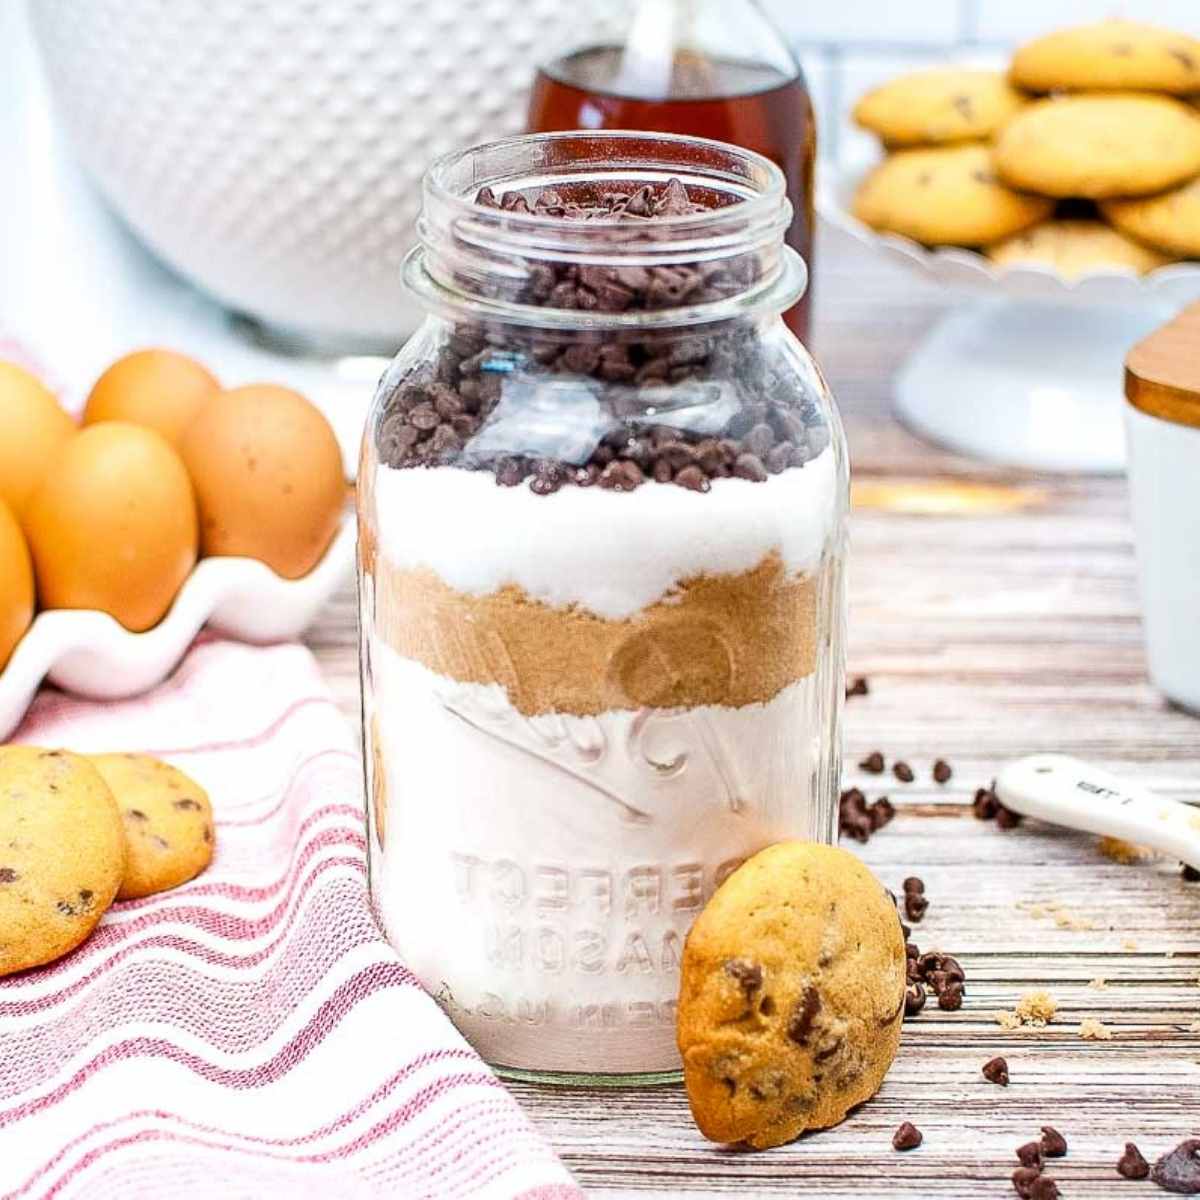 https://www.areinventedmom.com/wp-content/uploads/2021/11/mason-jar-chocolate-chip-cookies-featured-image.jpg